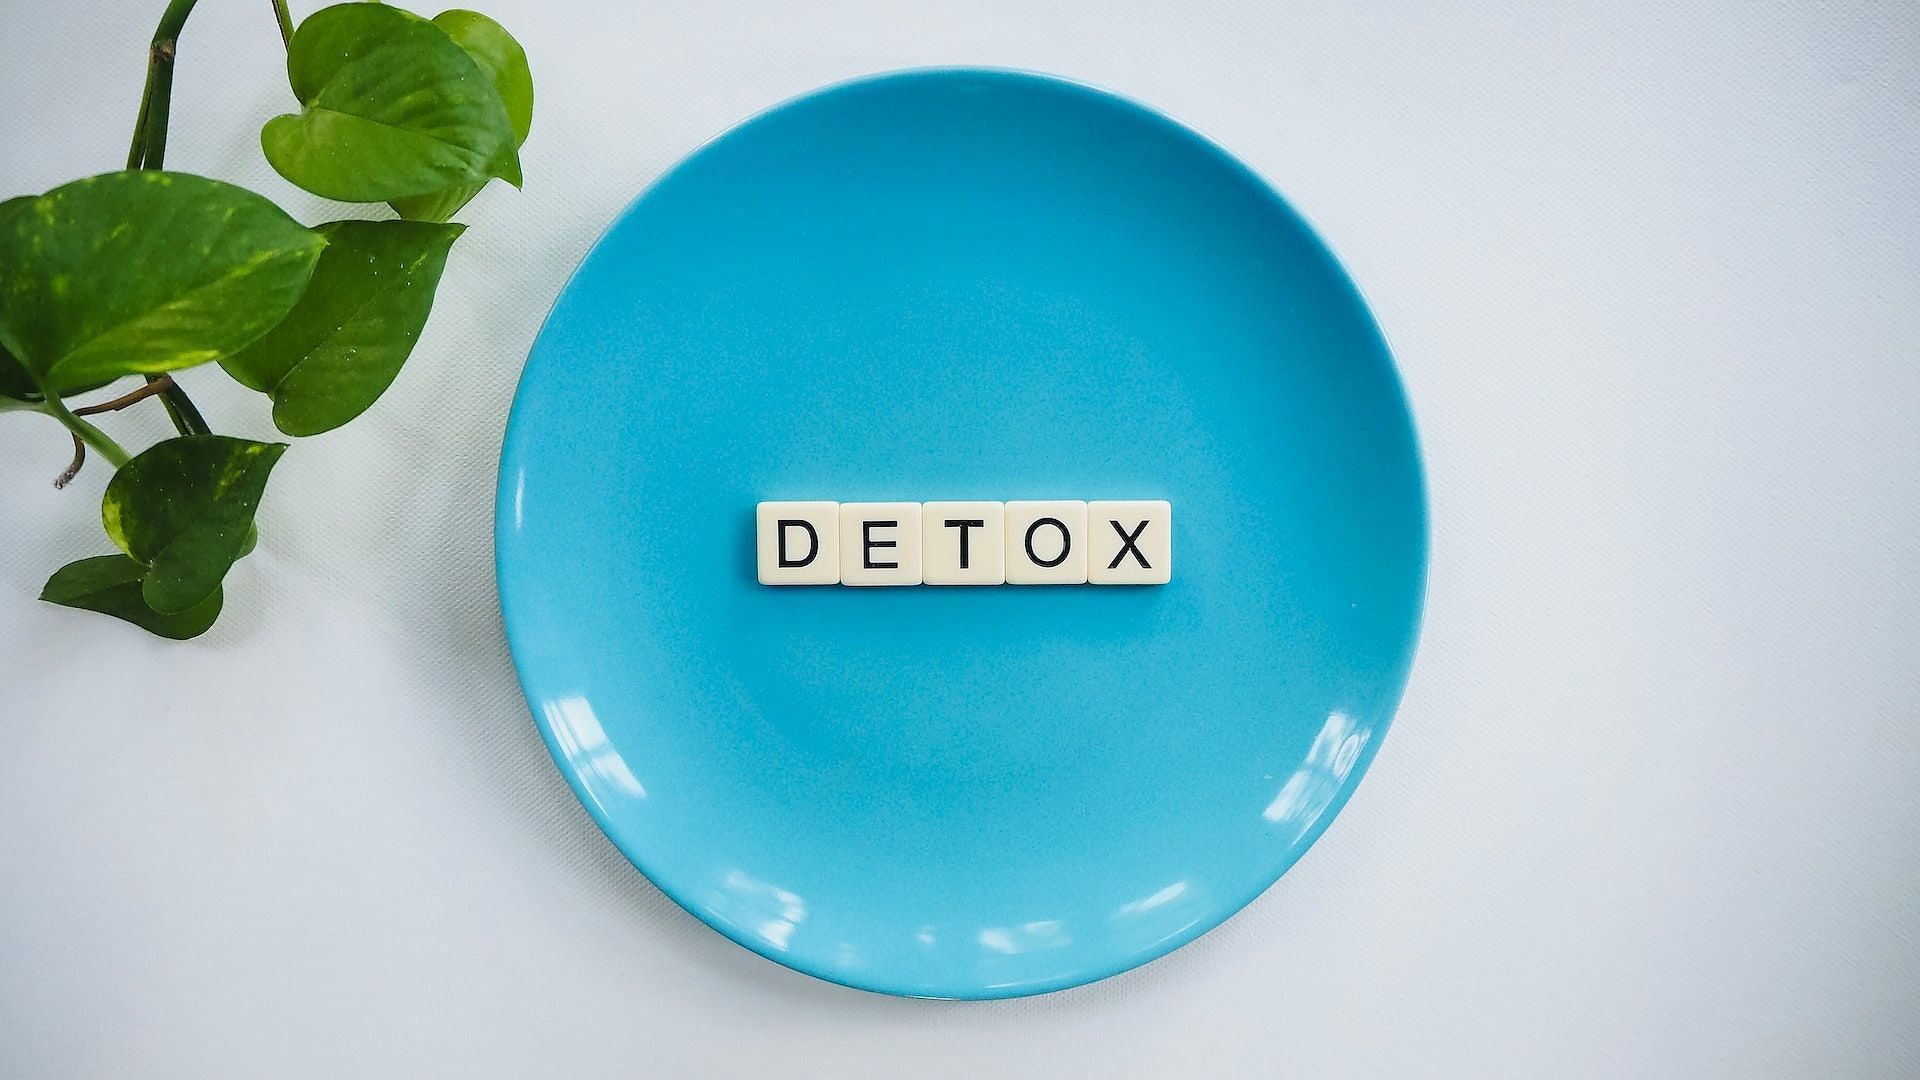 Body detox helps eliminate toxins from the body. (Photo via Pexels/Vegan Liftz)